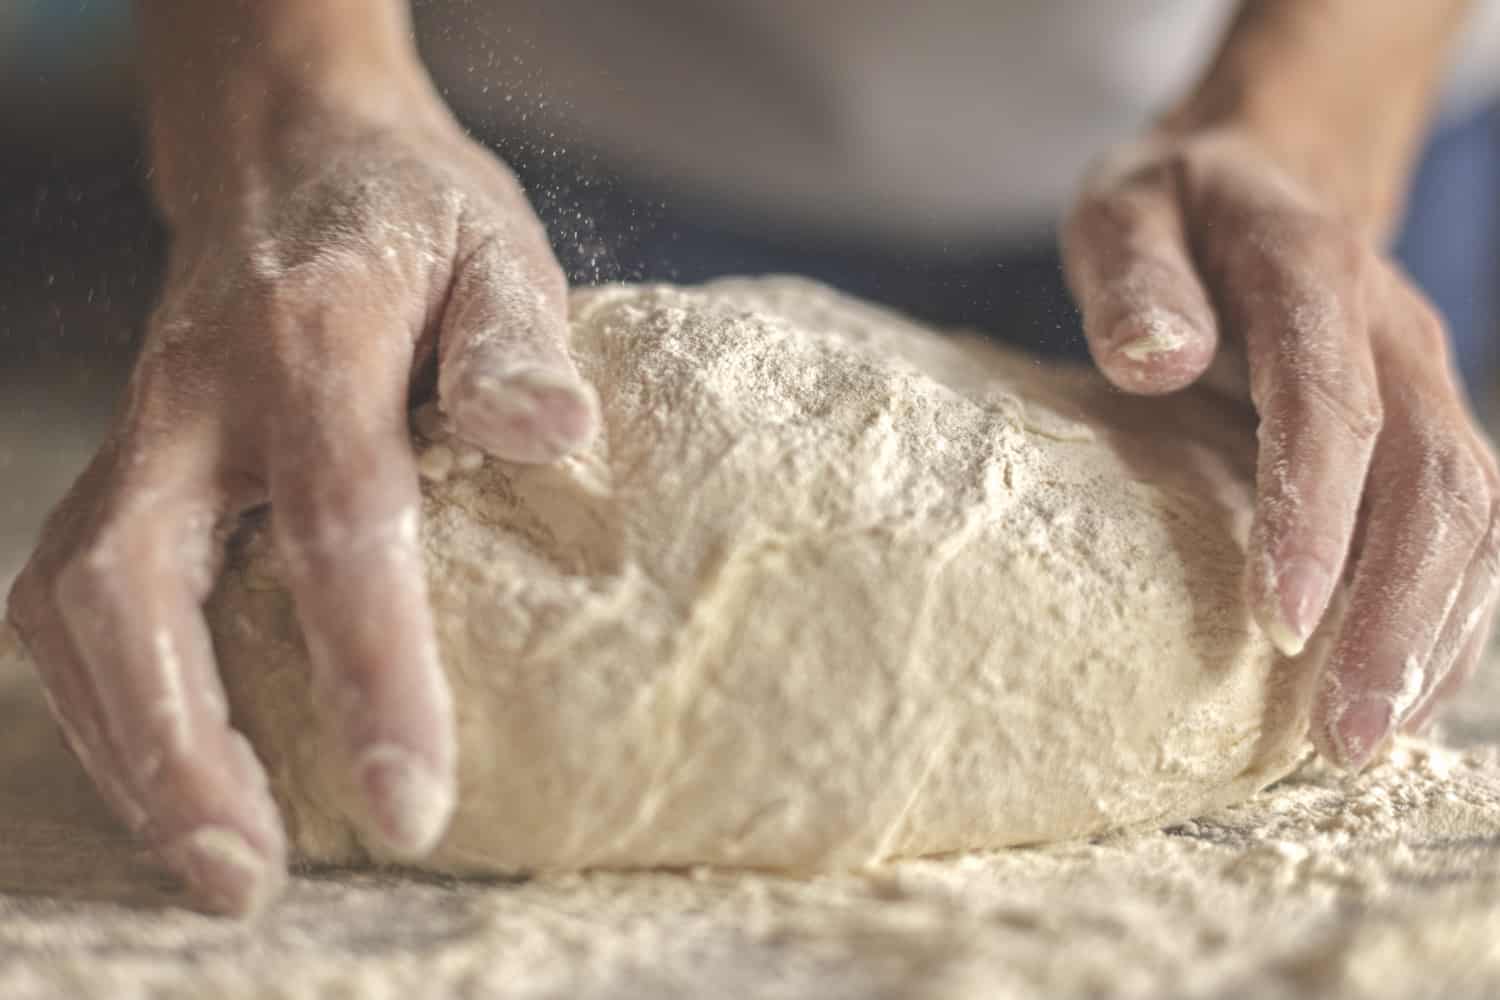 Kneading yeast dough